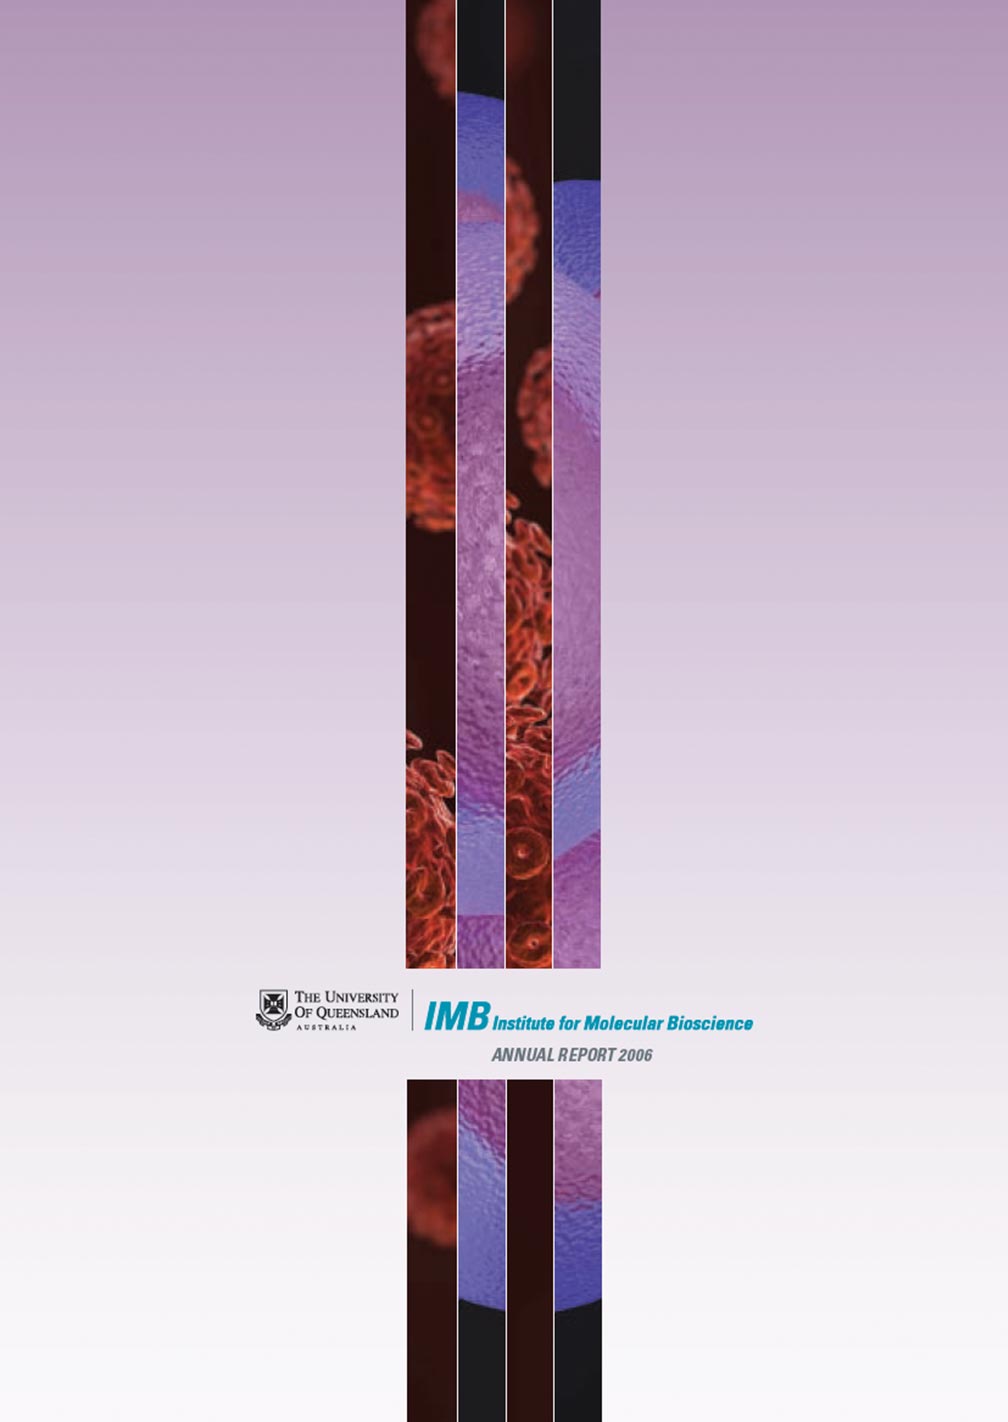 2006 annual report cover